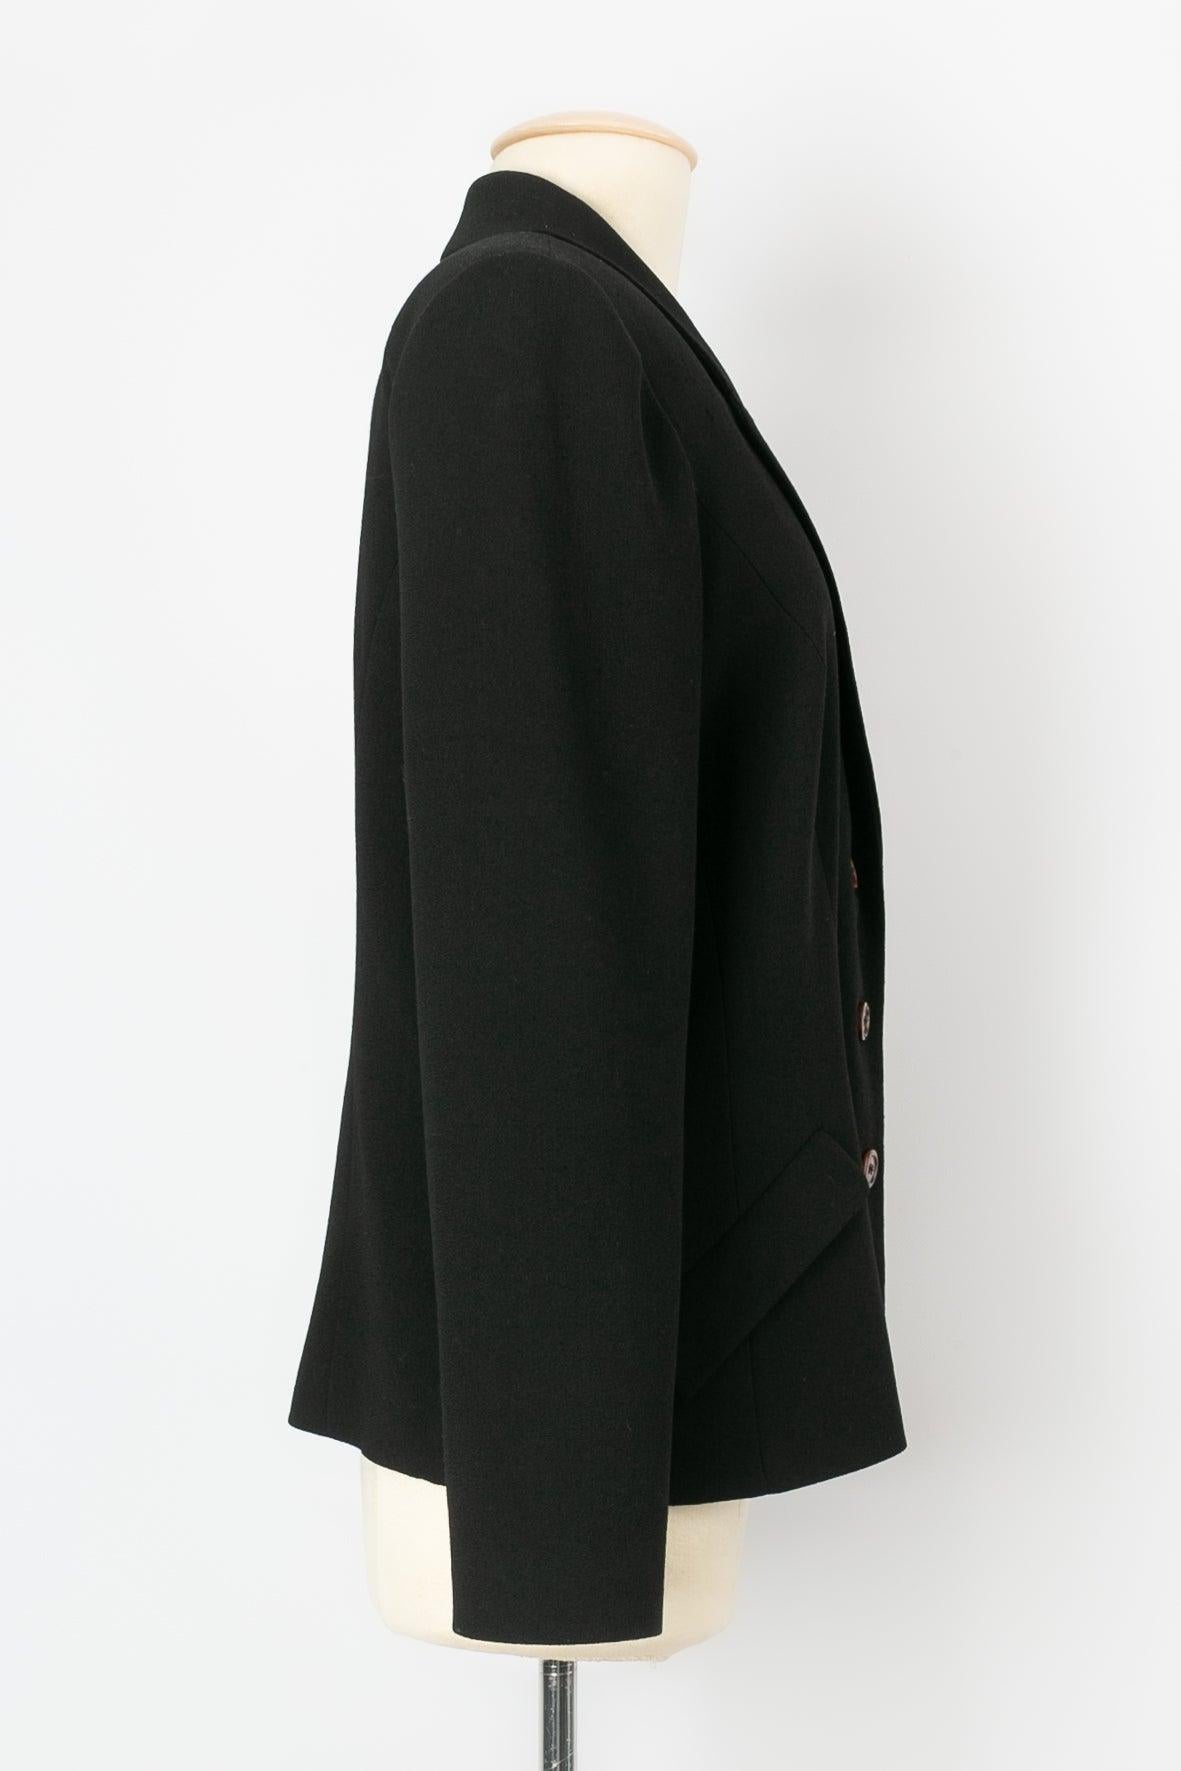 Women's Christian Lacroix Black Wool Blazer Jacket For Sale